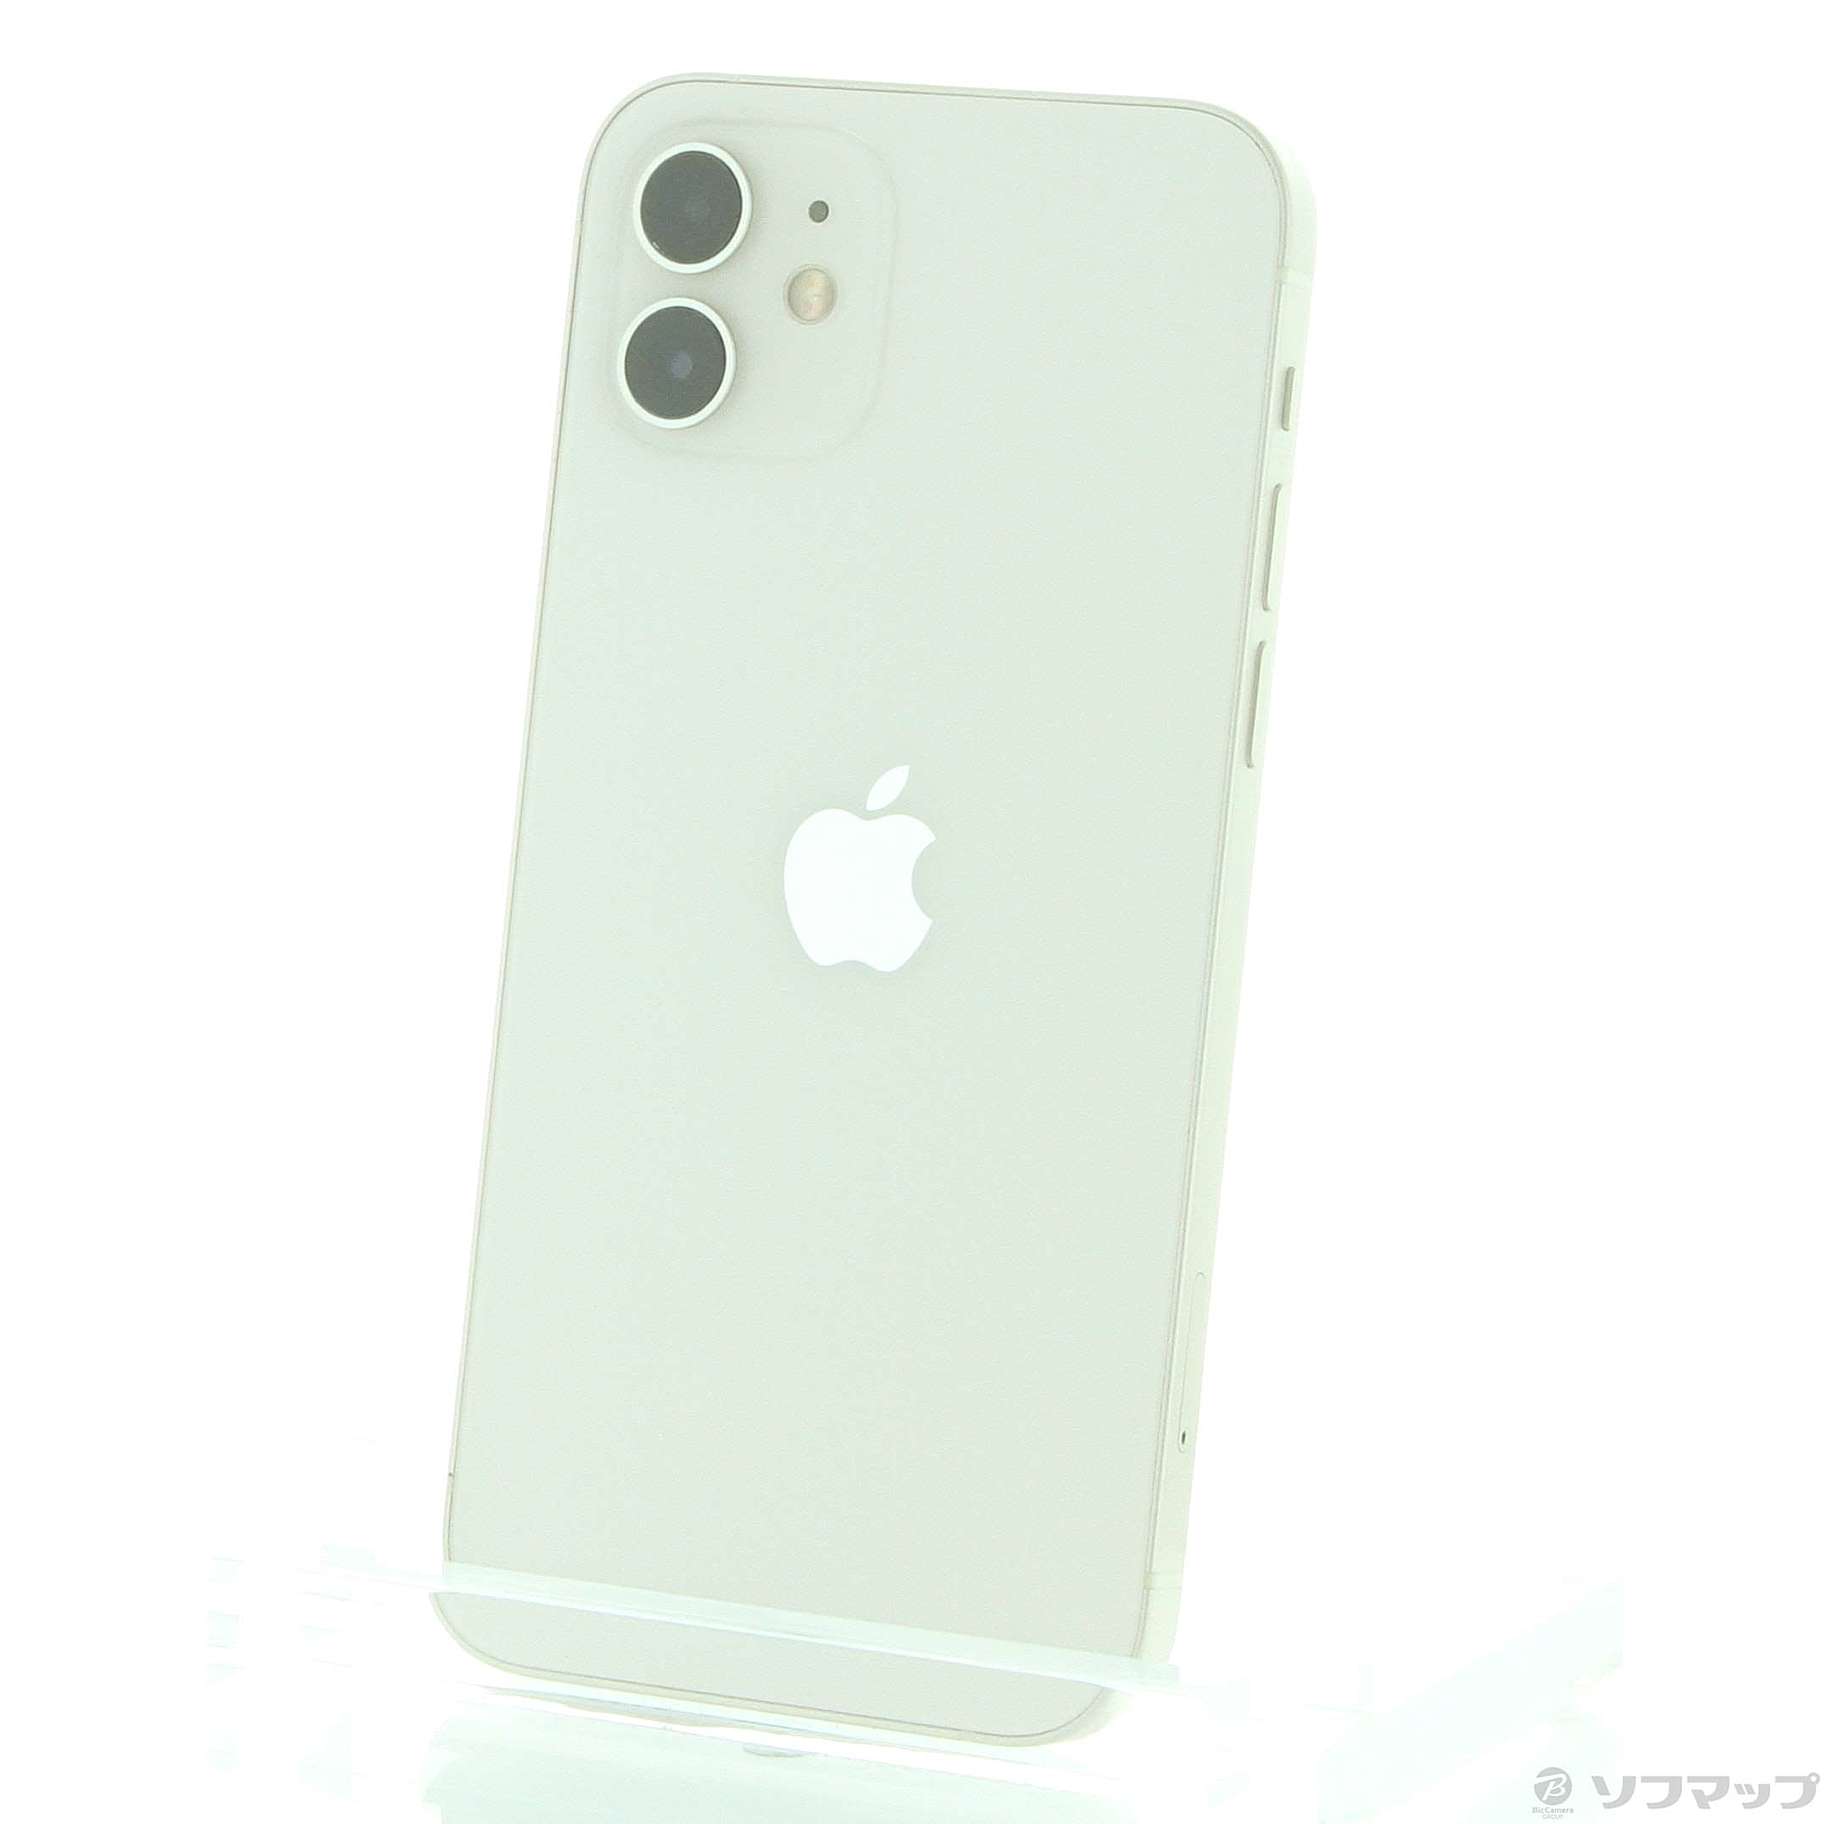 iPhone 12 64GB SIMフリー [ホワイト] 中古(白ロム)価格比較 - 価格